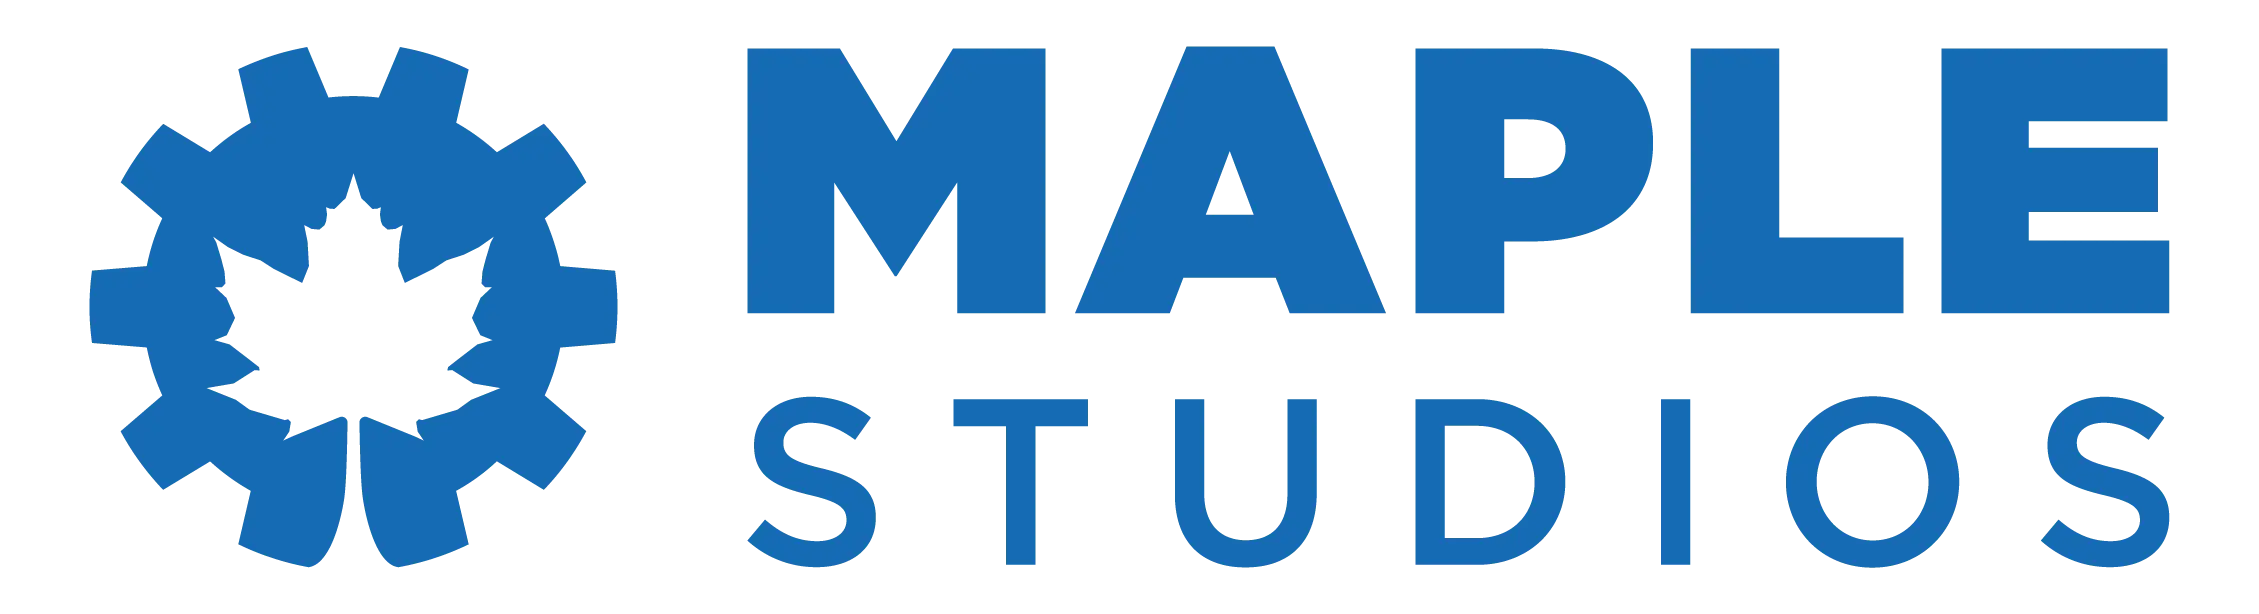 Maple Studios Logo in Color